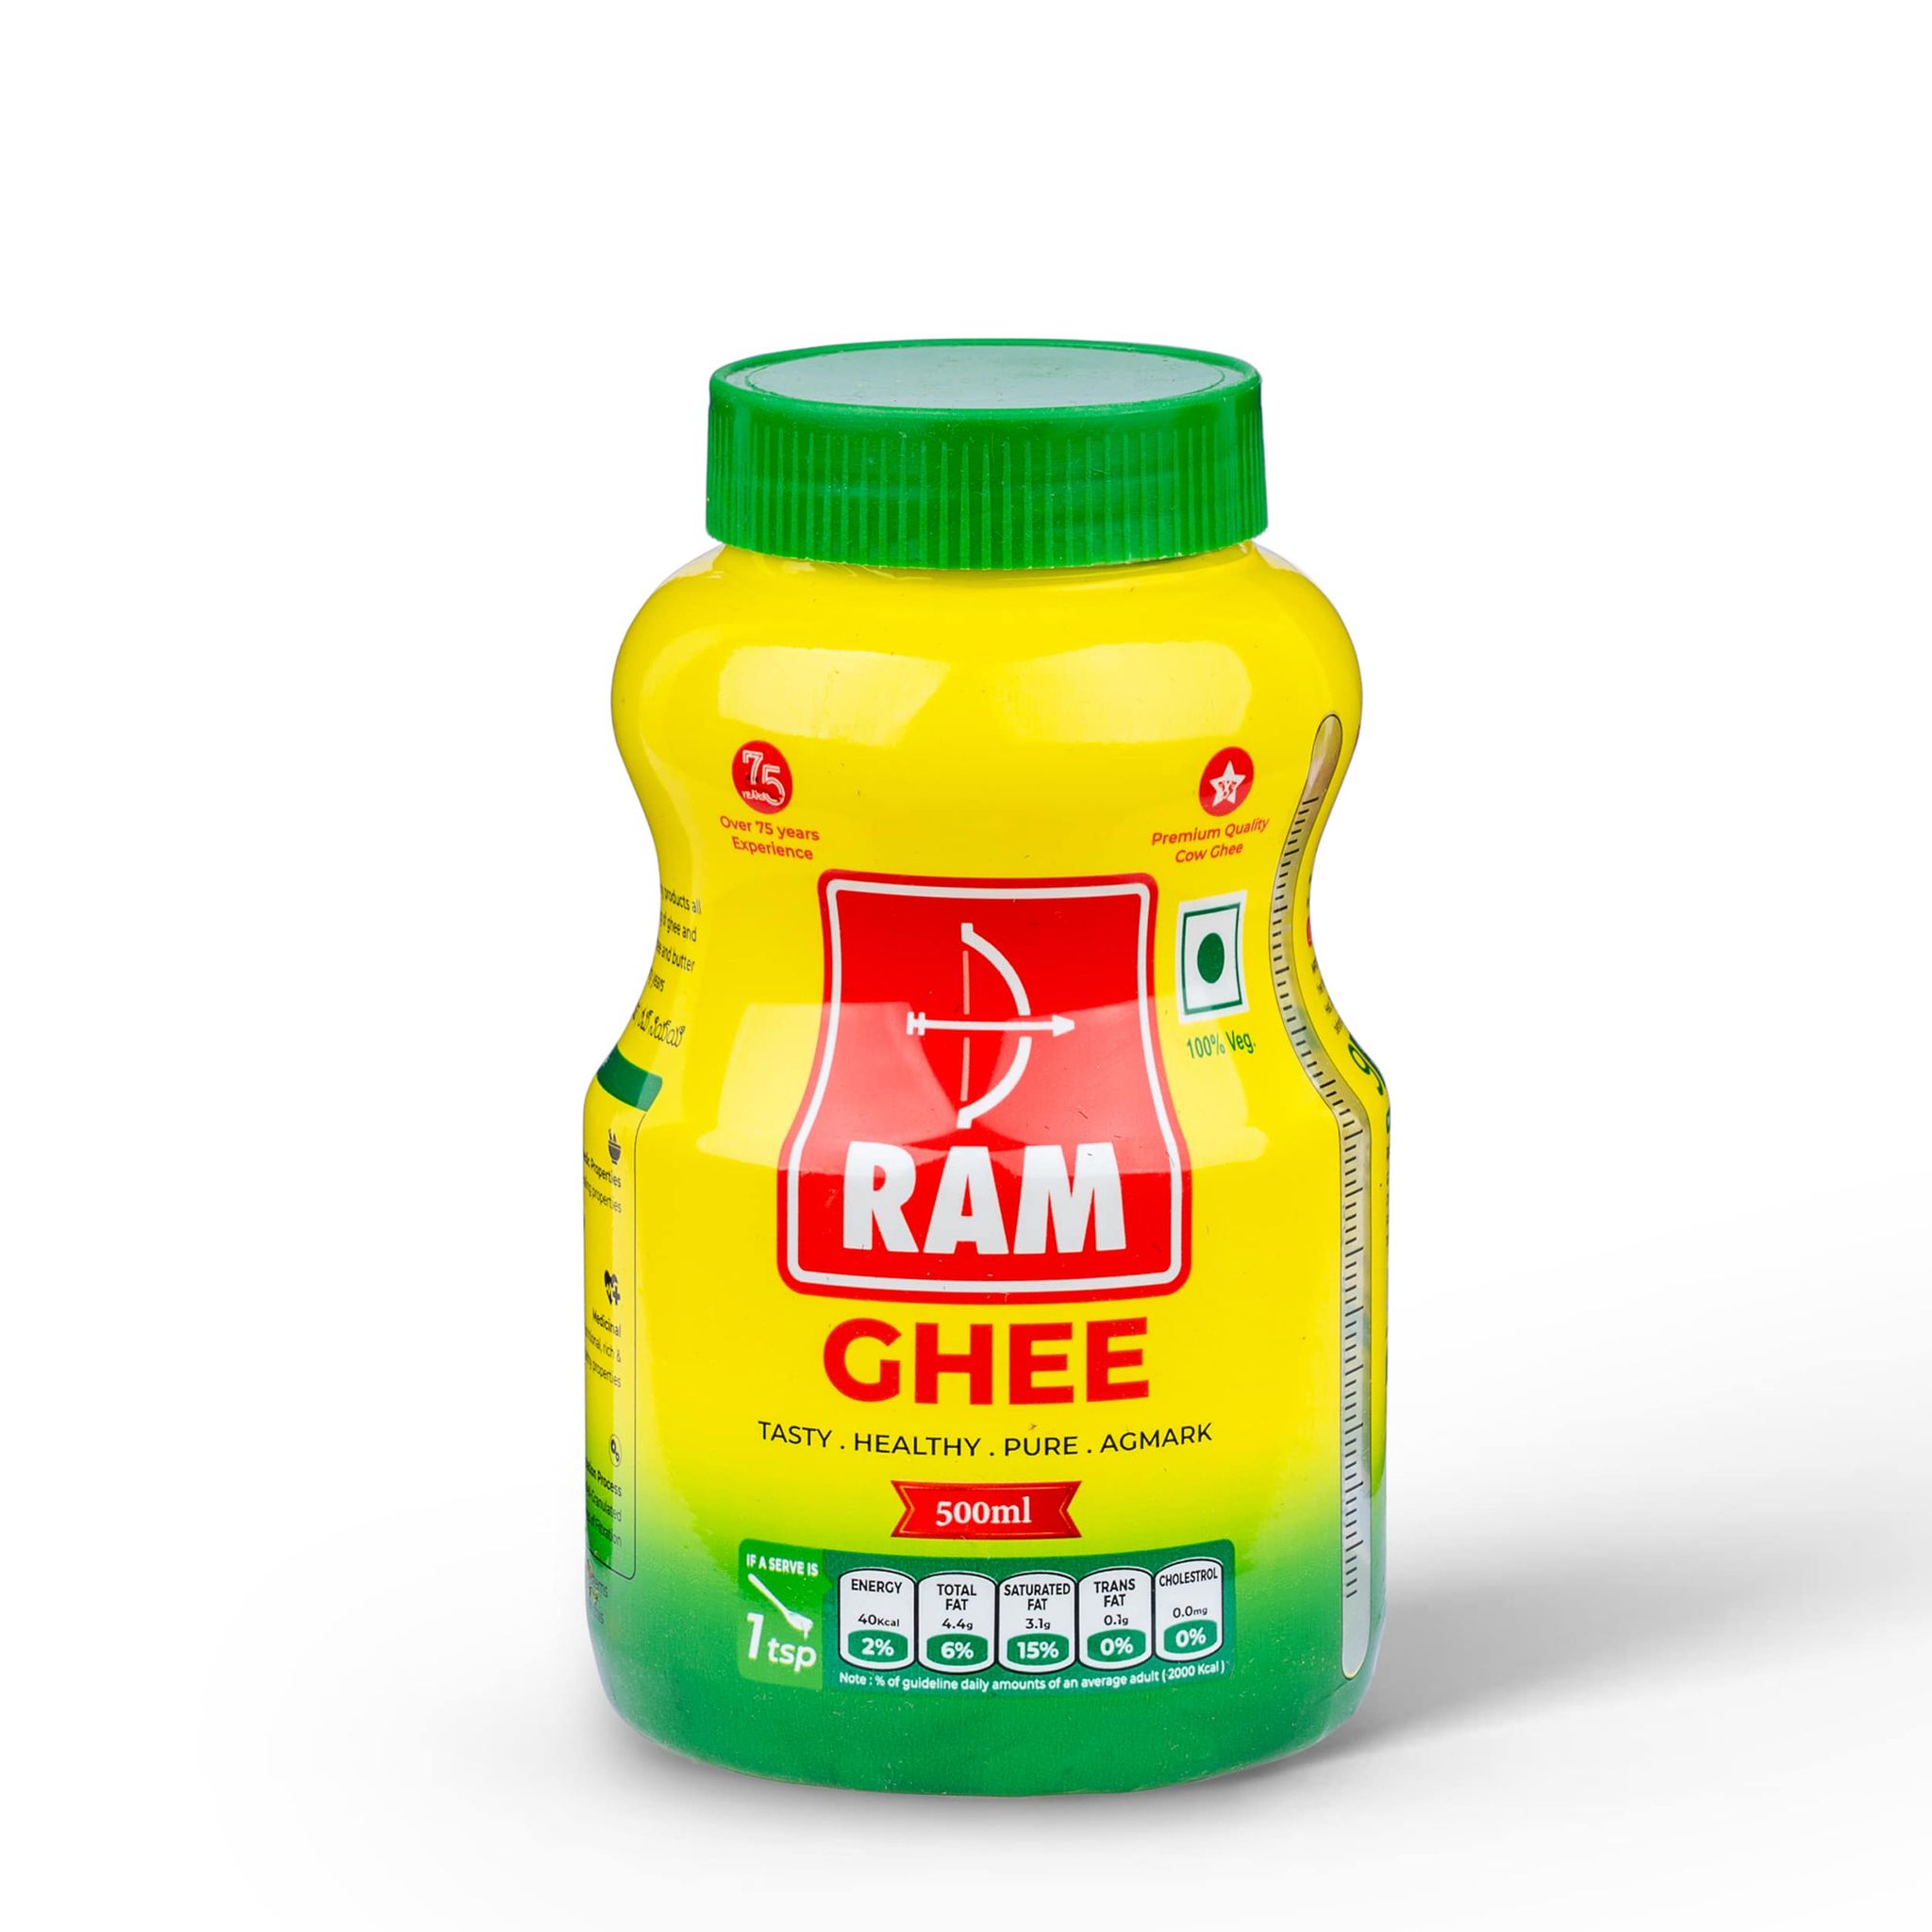 Ram Ghee 500ml Jar